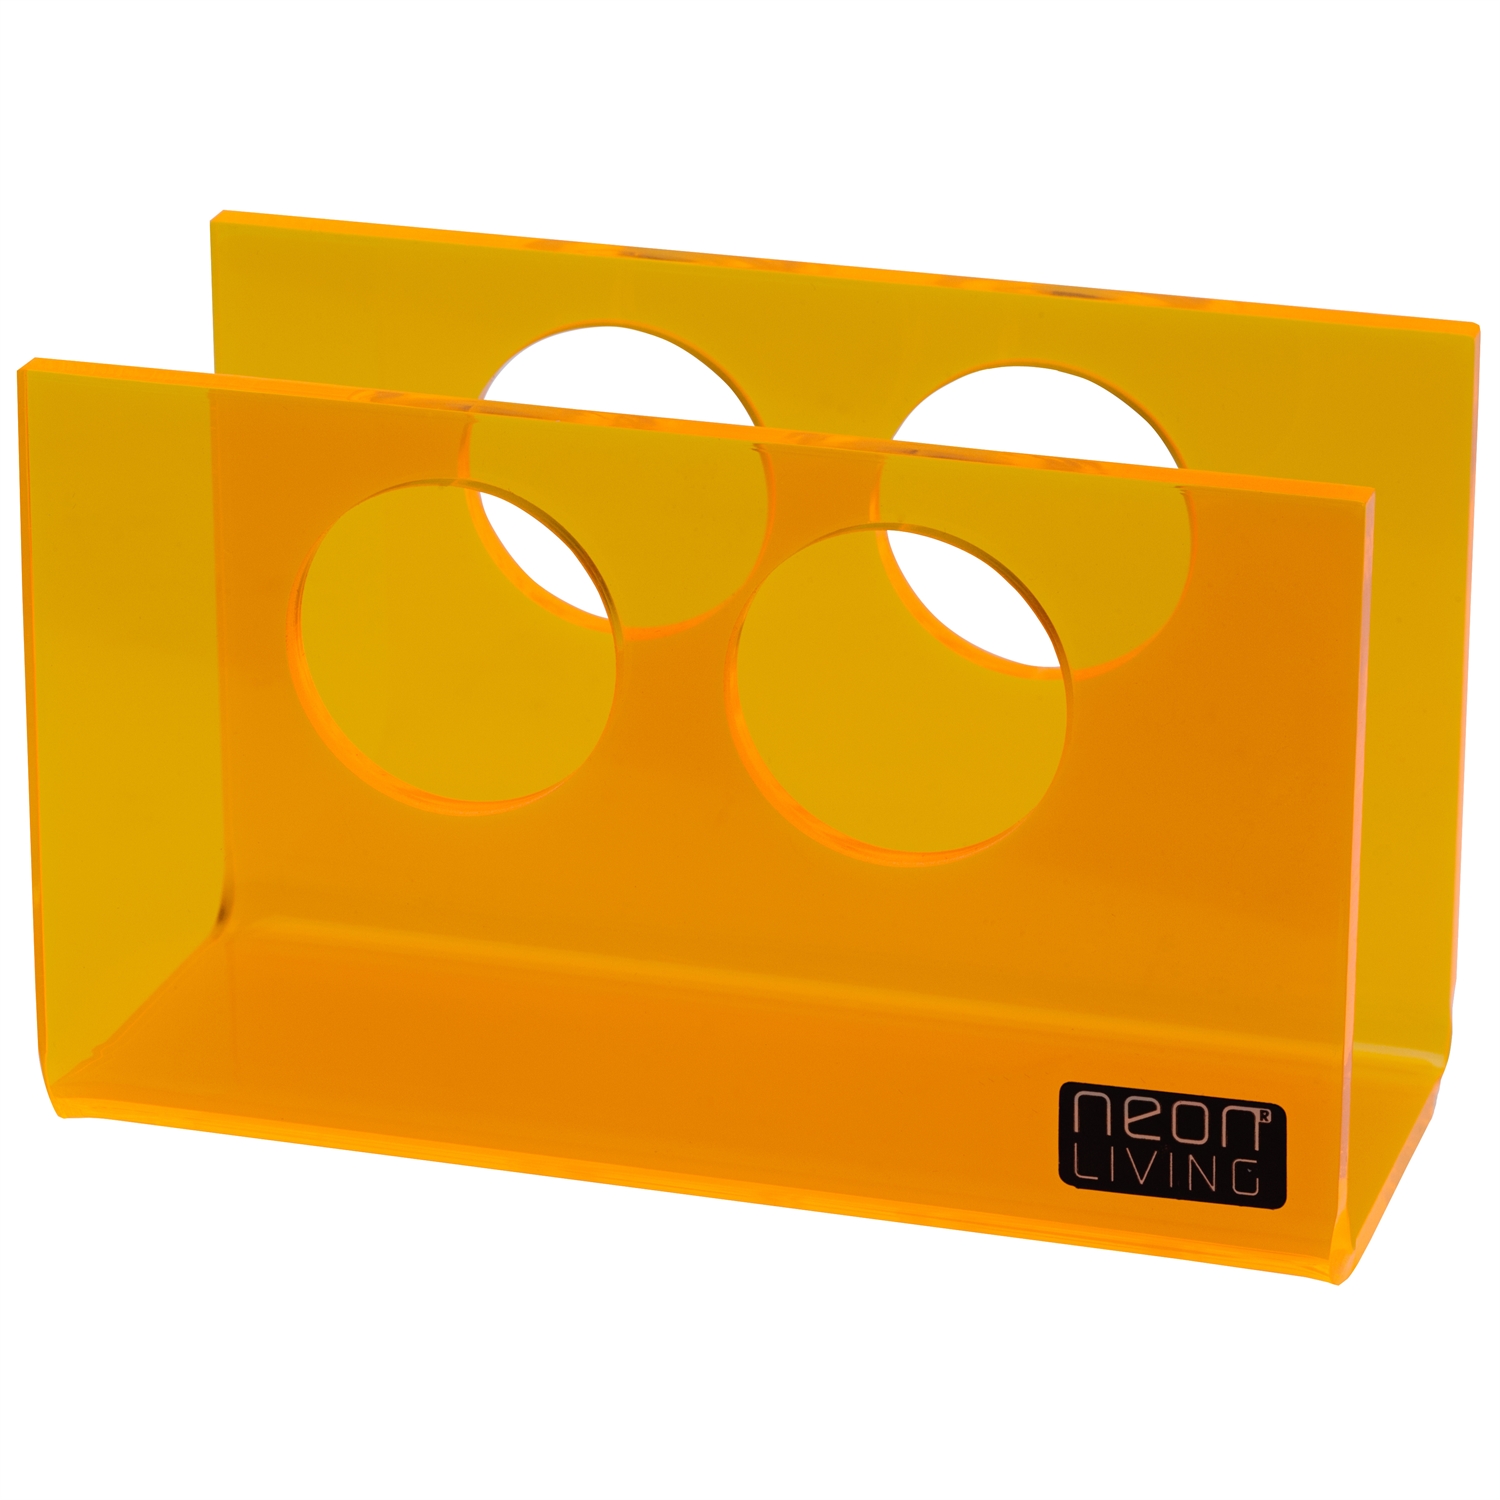 Orange acrylic napkin holder from Neon Living